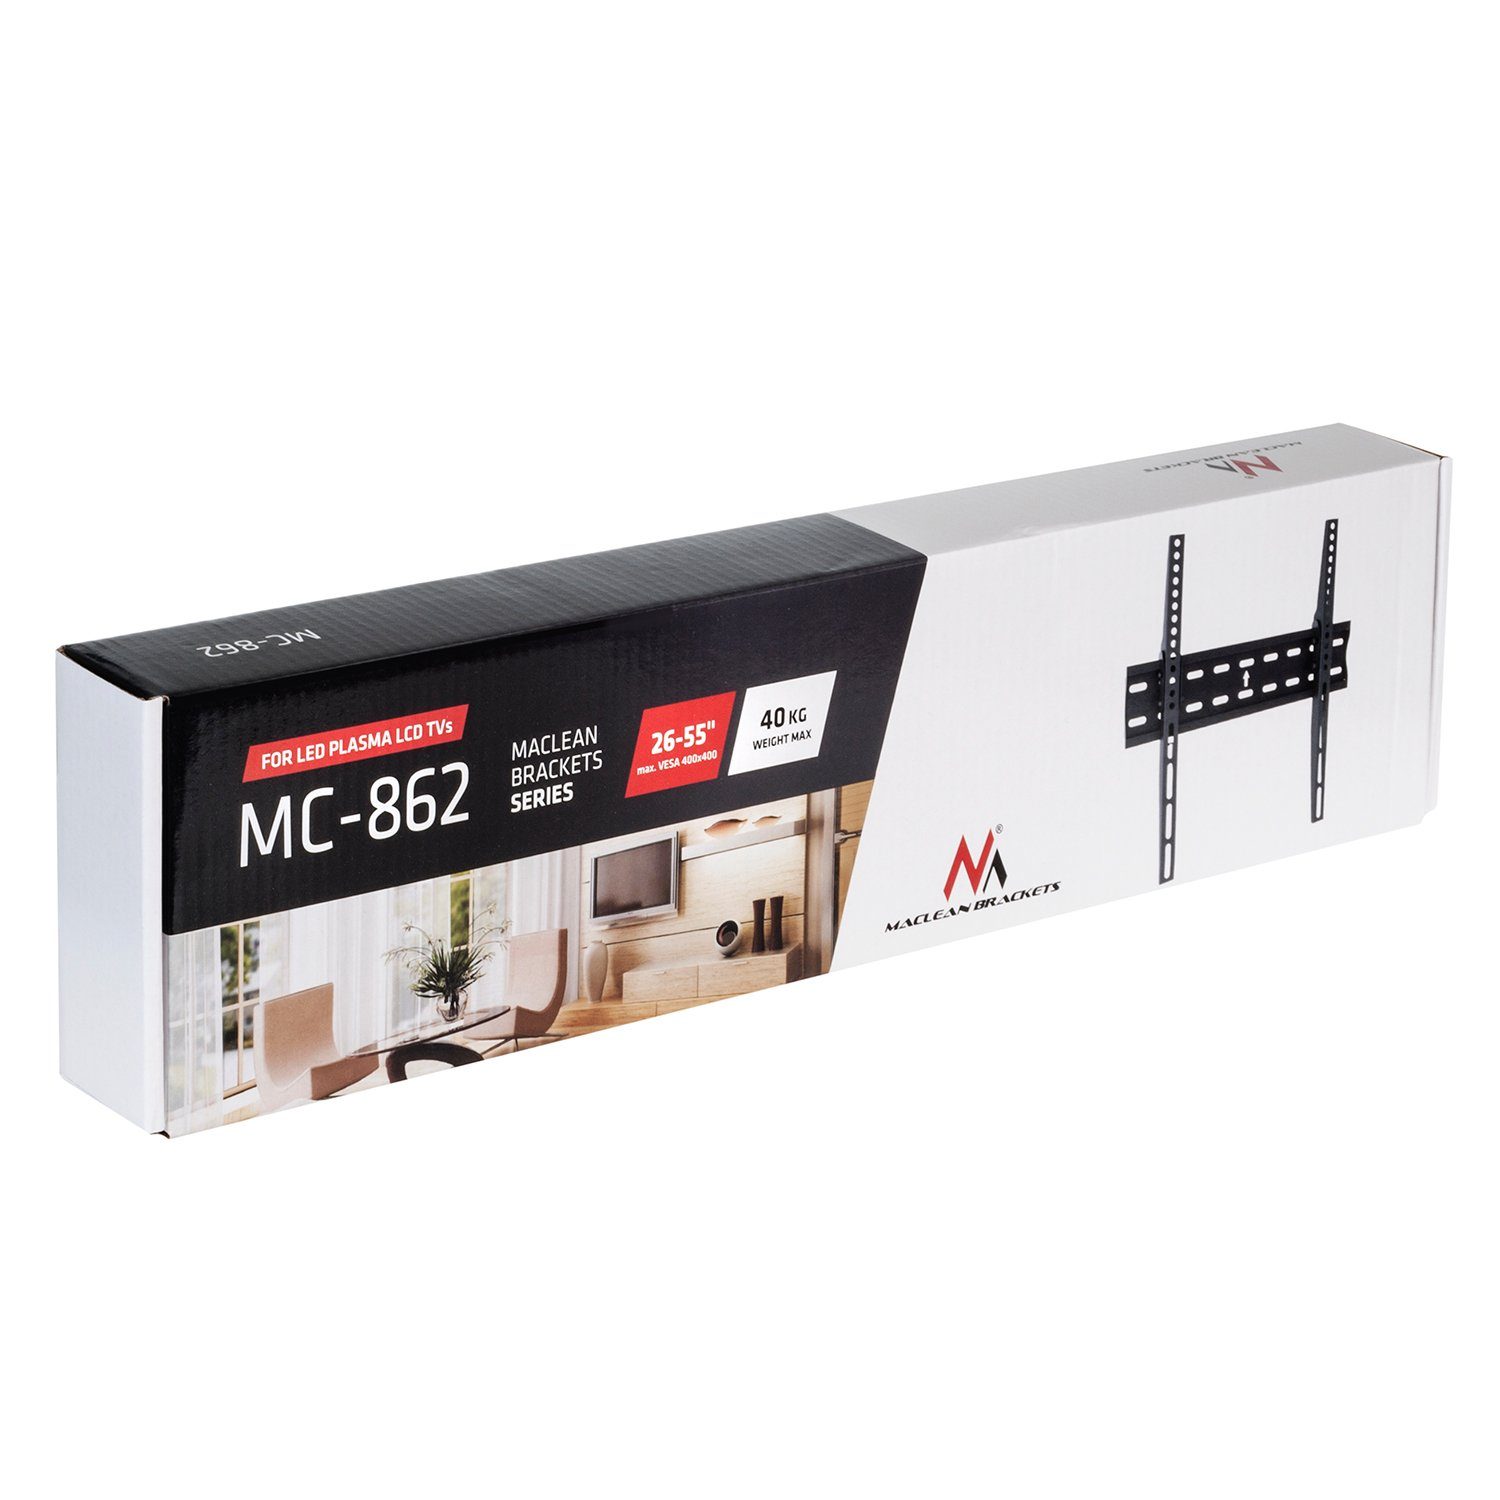 Wandhalterung (bis bis Ultra 26-55" Zoll, MC-862 55,00 Maclean 40kg) TV-Wandhalterung, Slim TV